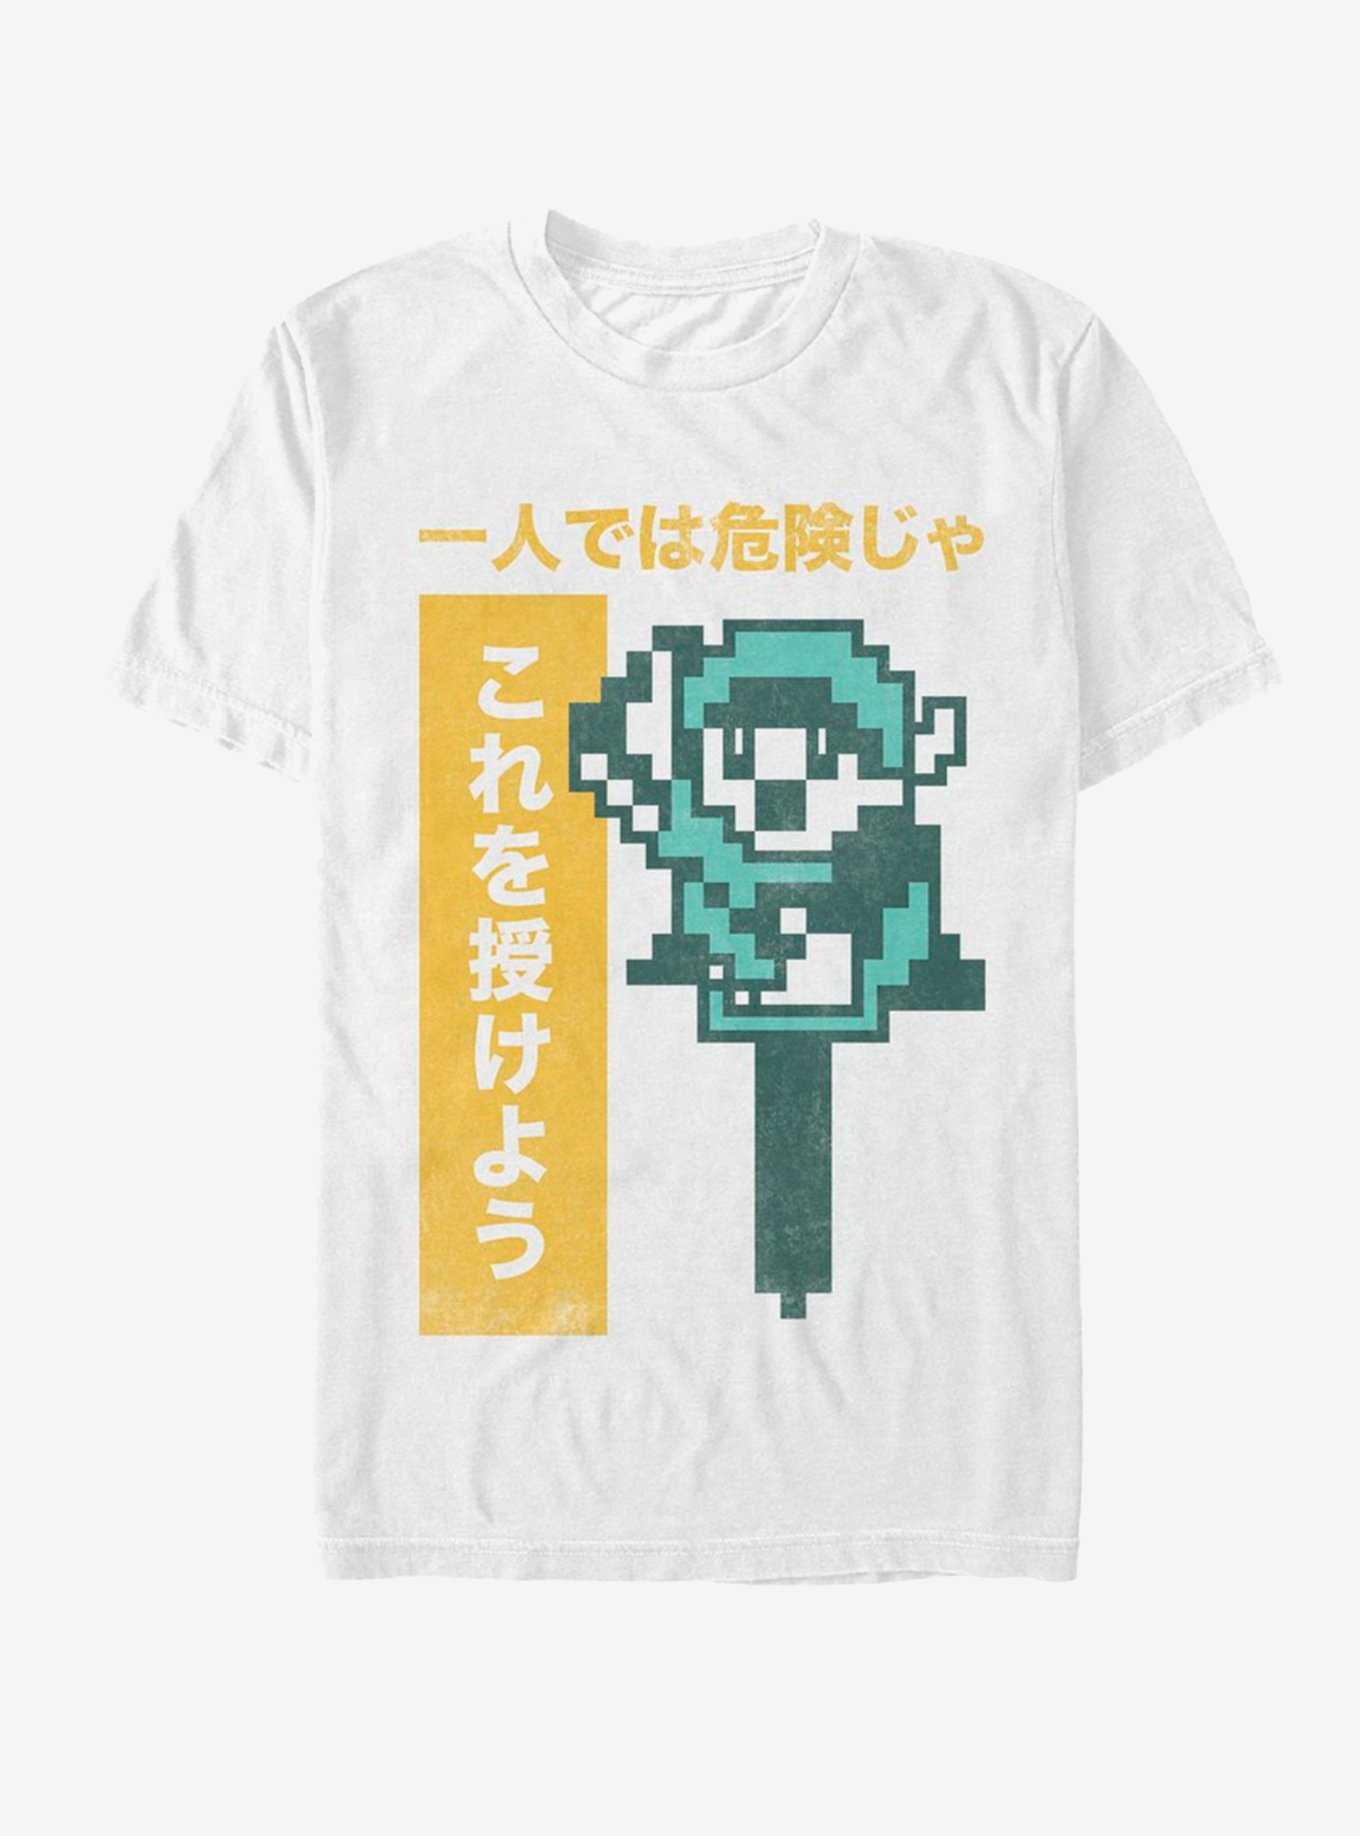 Nintendo Never Alone T-Shirt, , hi-res